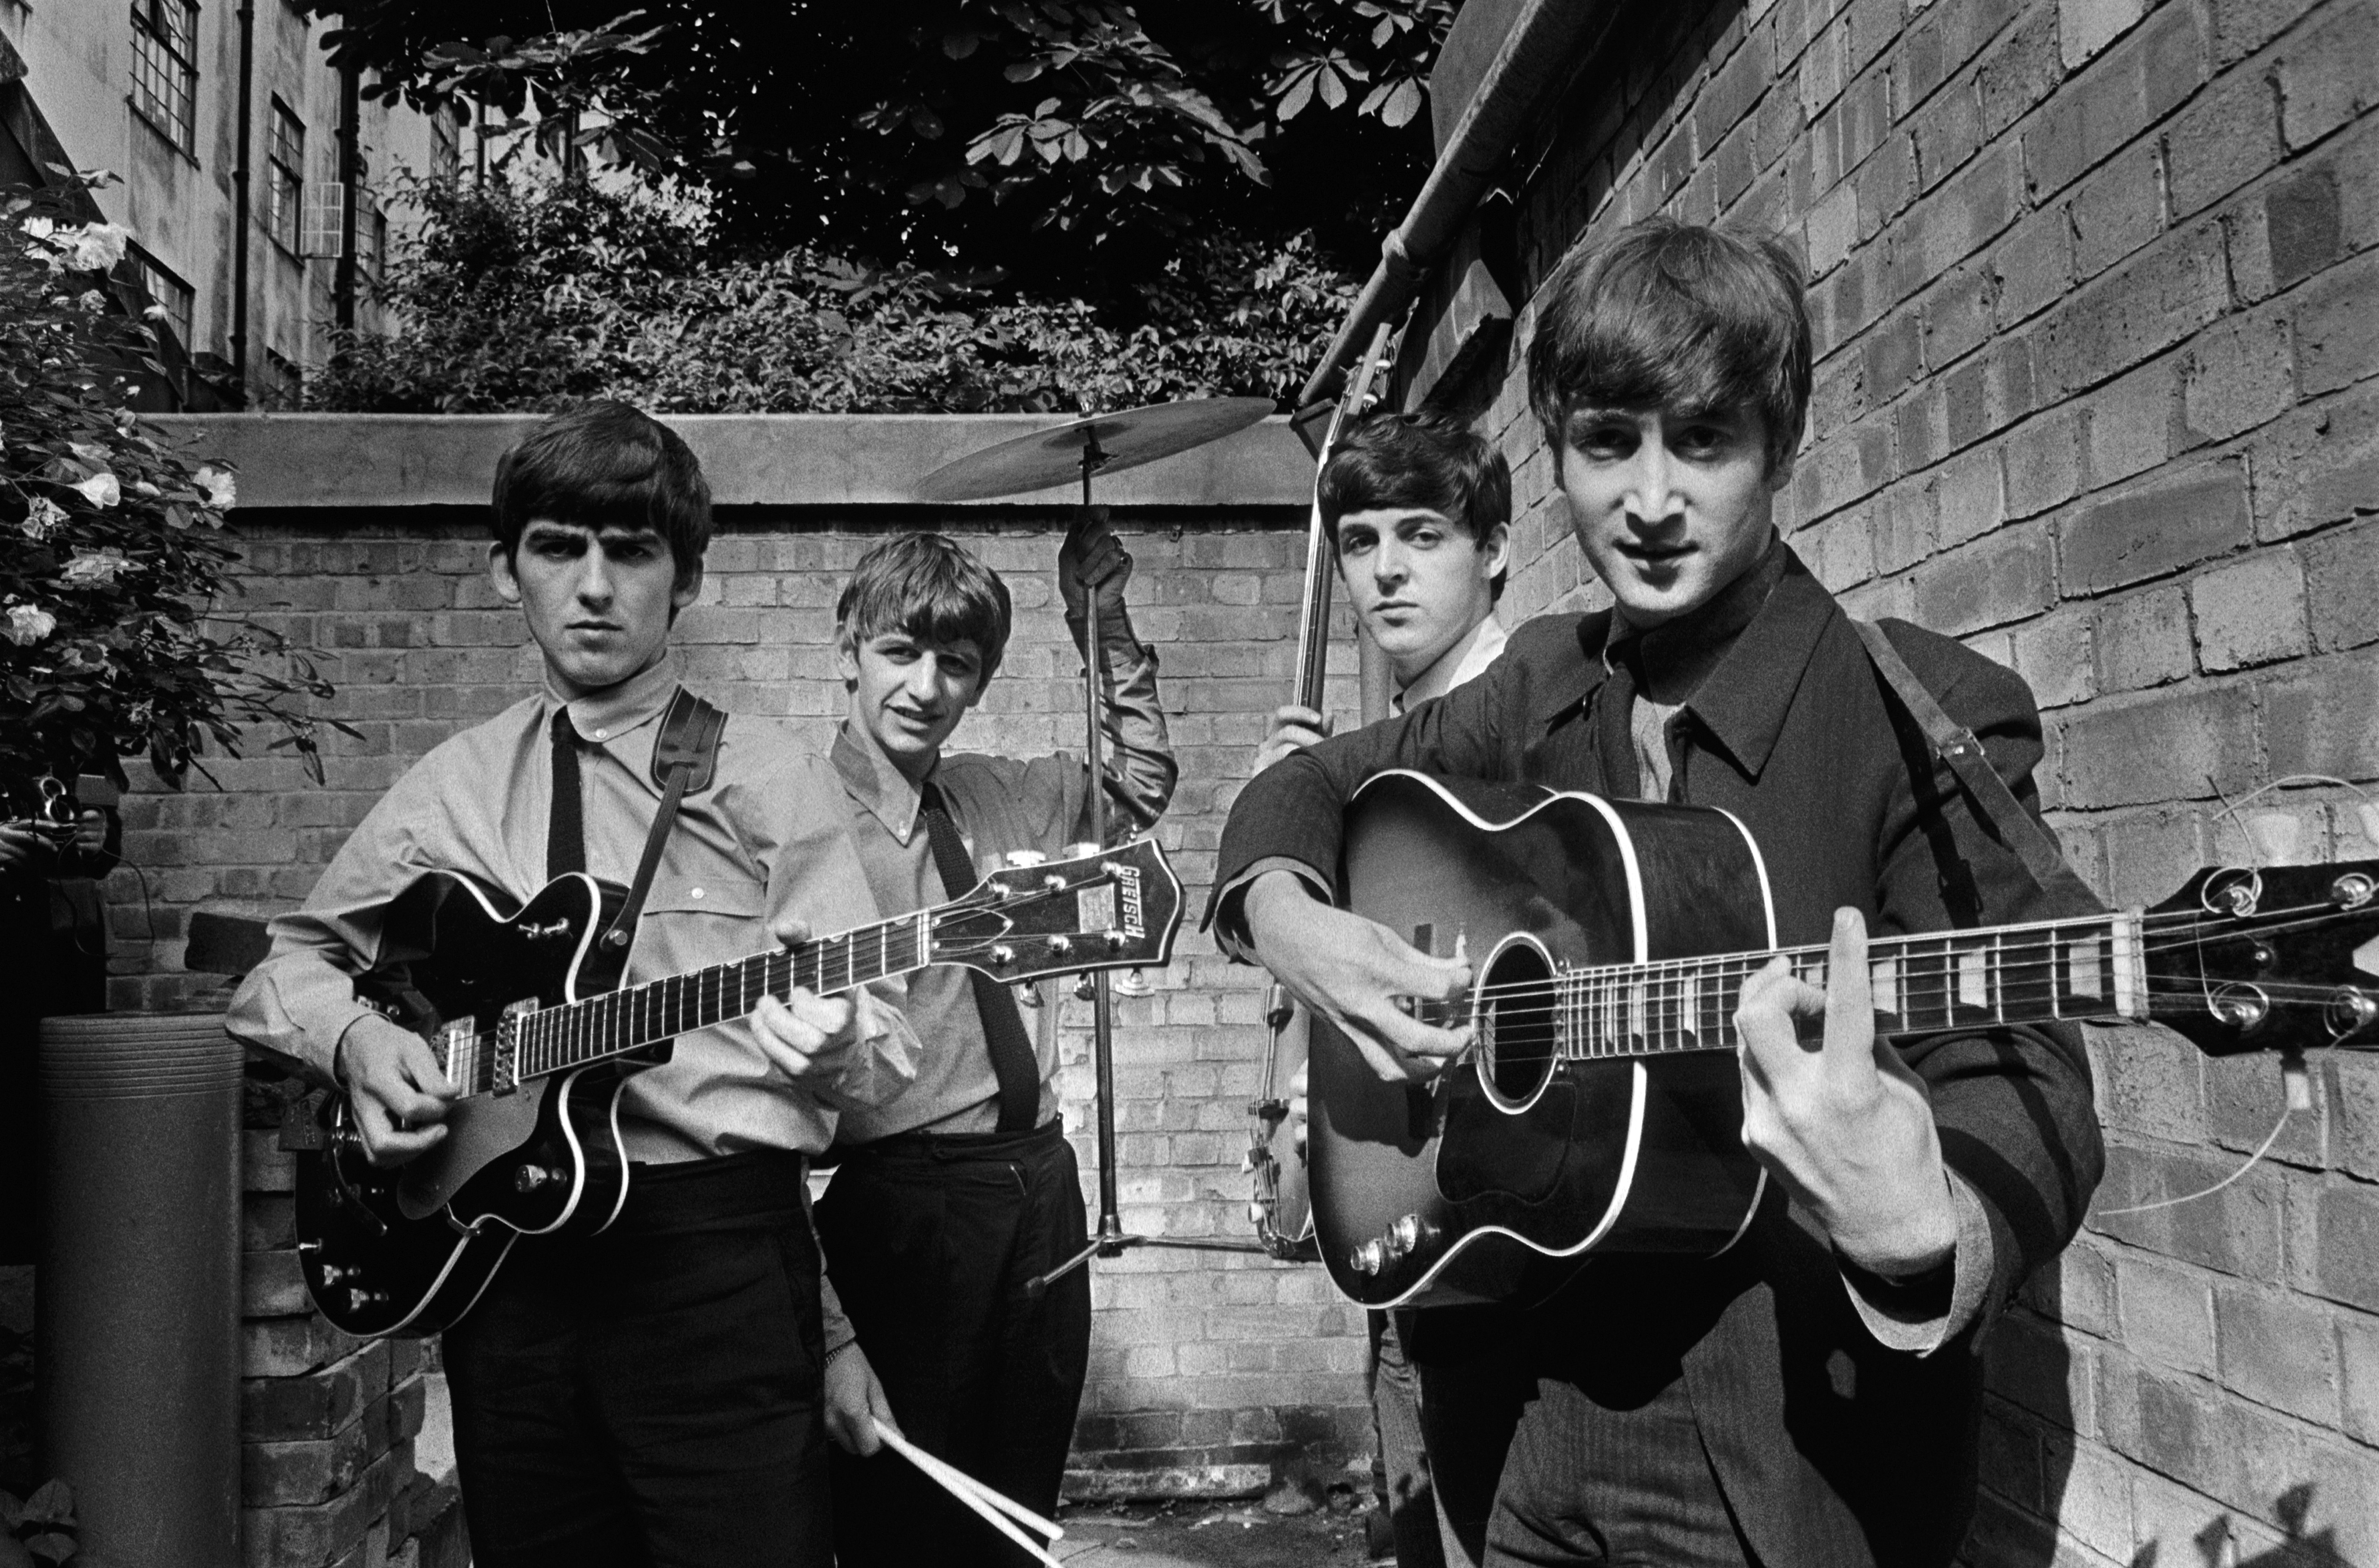 People 5100x3362 The Beatles John Lennon Paul McCartney Ringo Starr George Harrison band monochrome musical instrument men